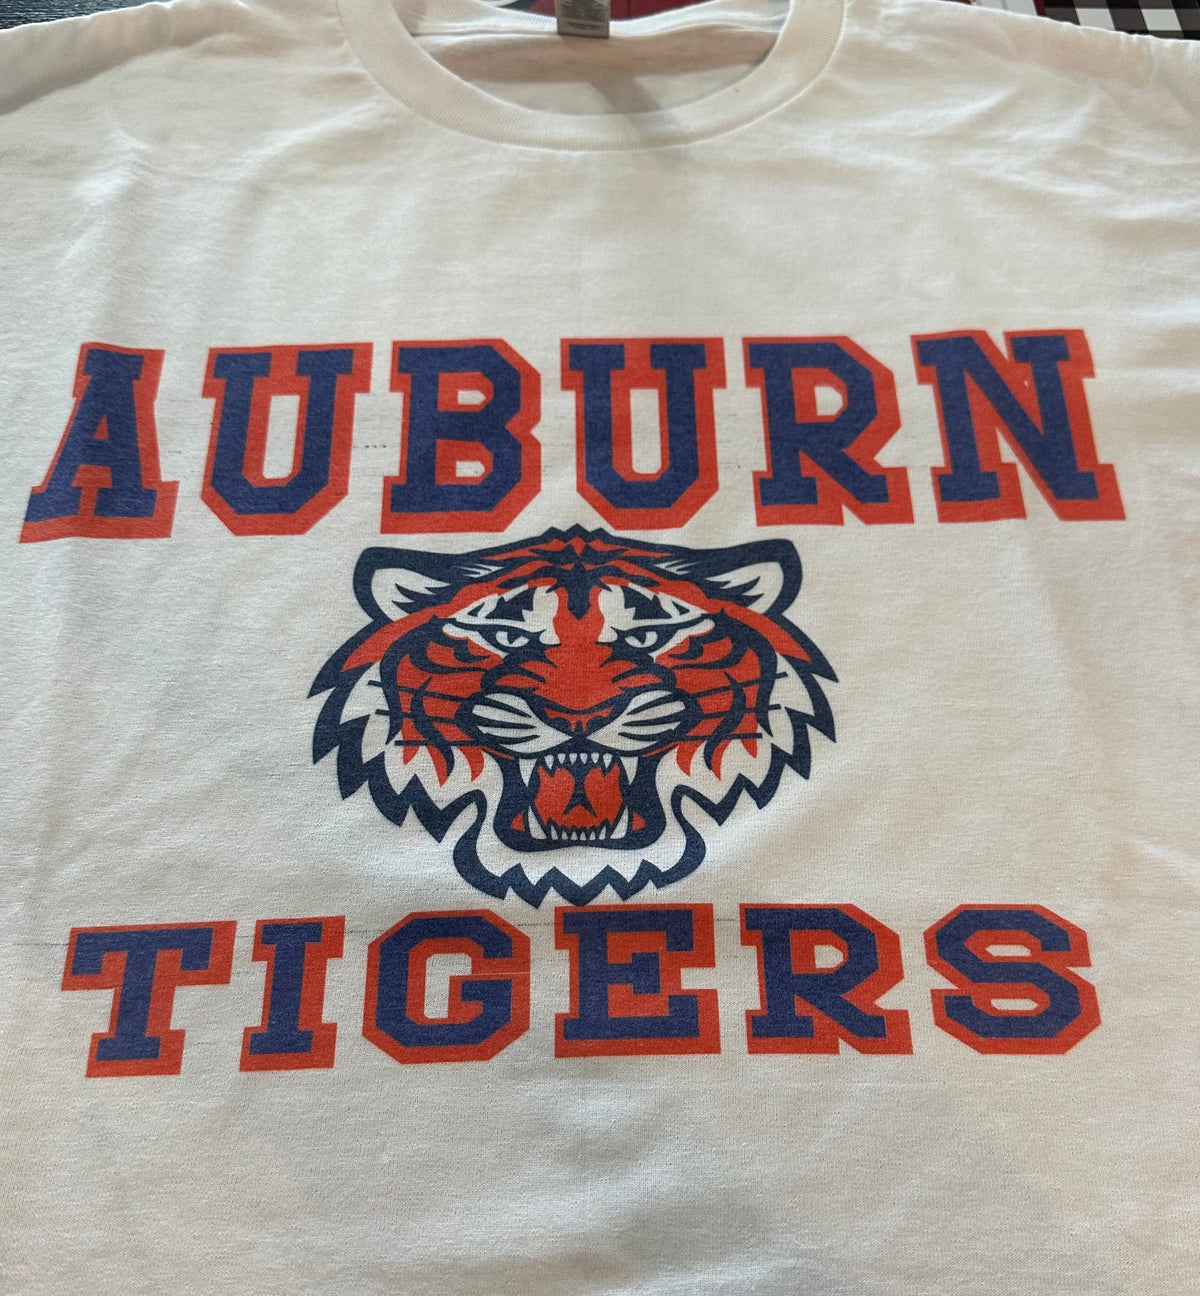 Auburn Tigers Graphic Tee